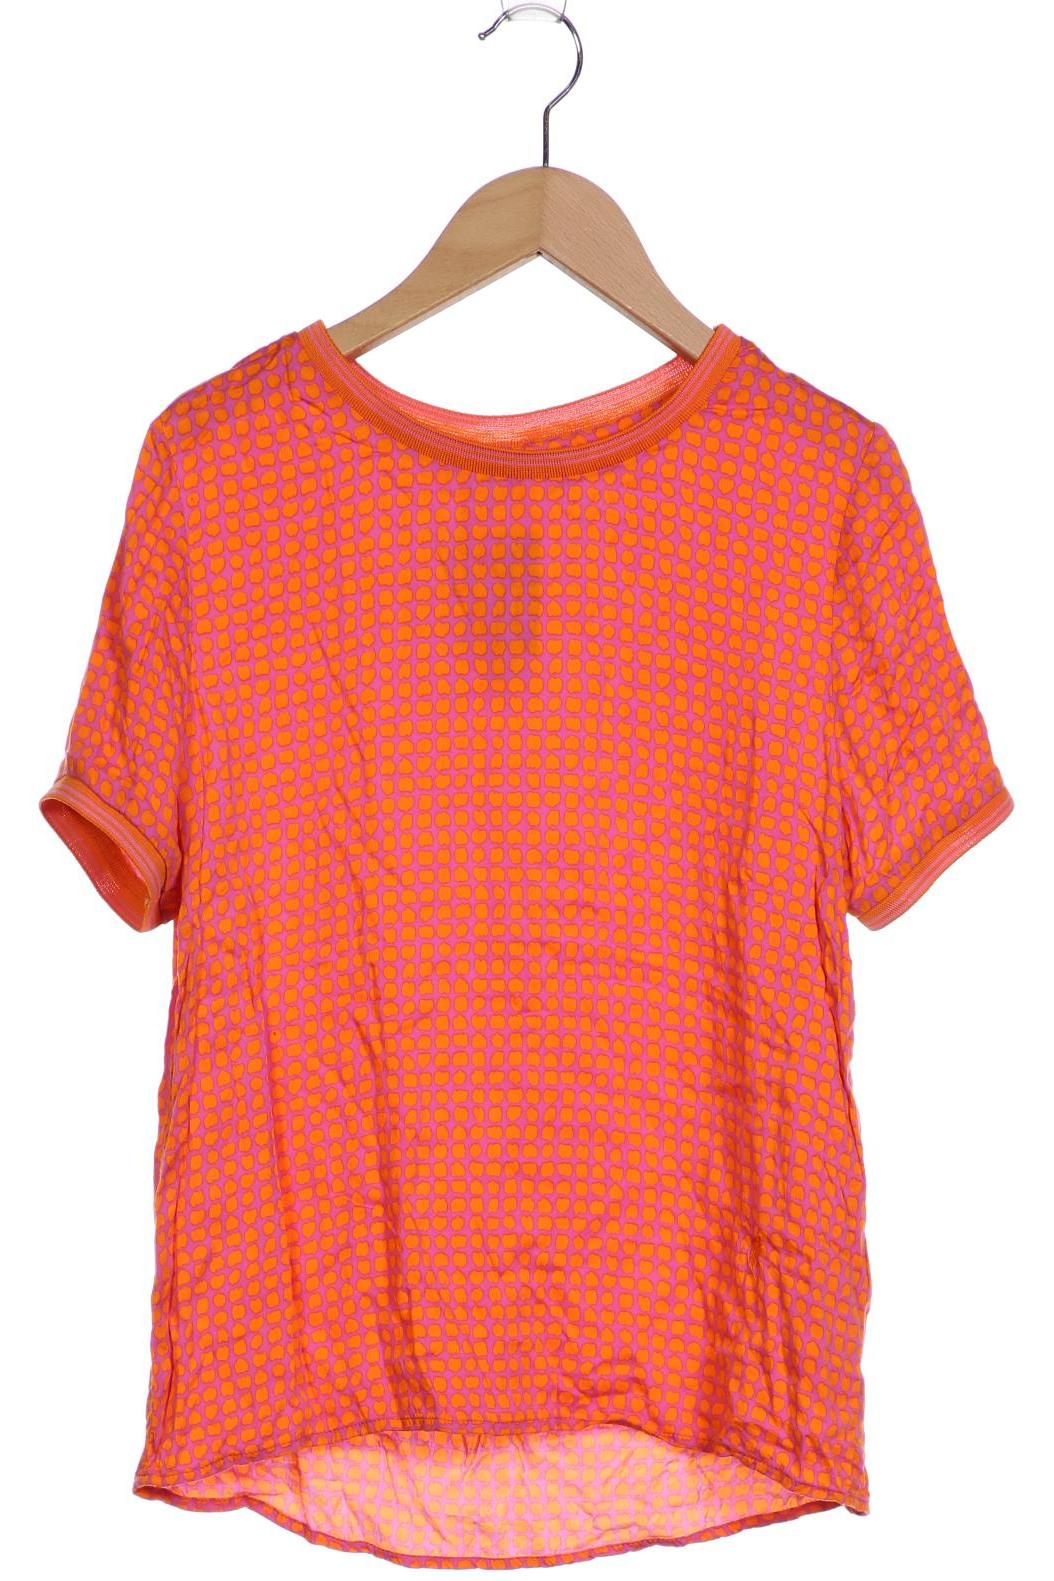 Emily van den Bergh Damen T-Shirt, orange, Gr. 36 von Emily van den Bergh